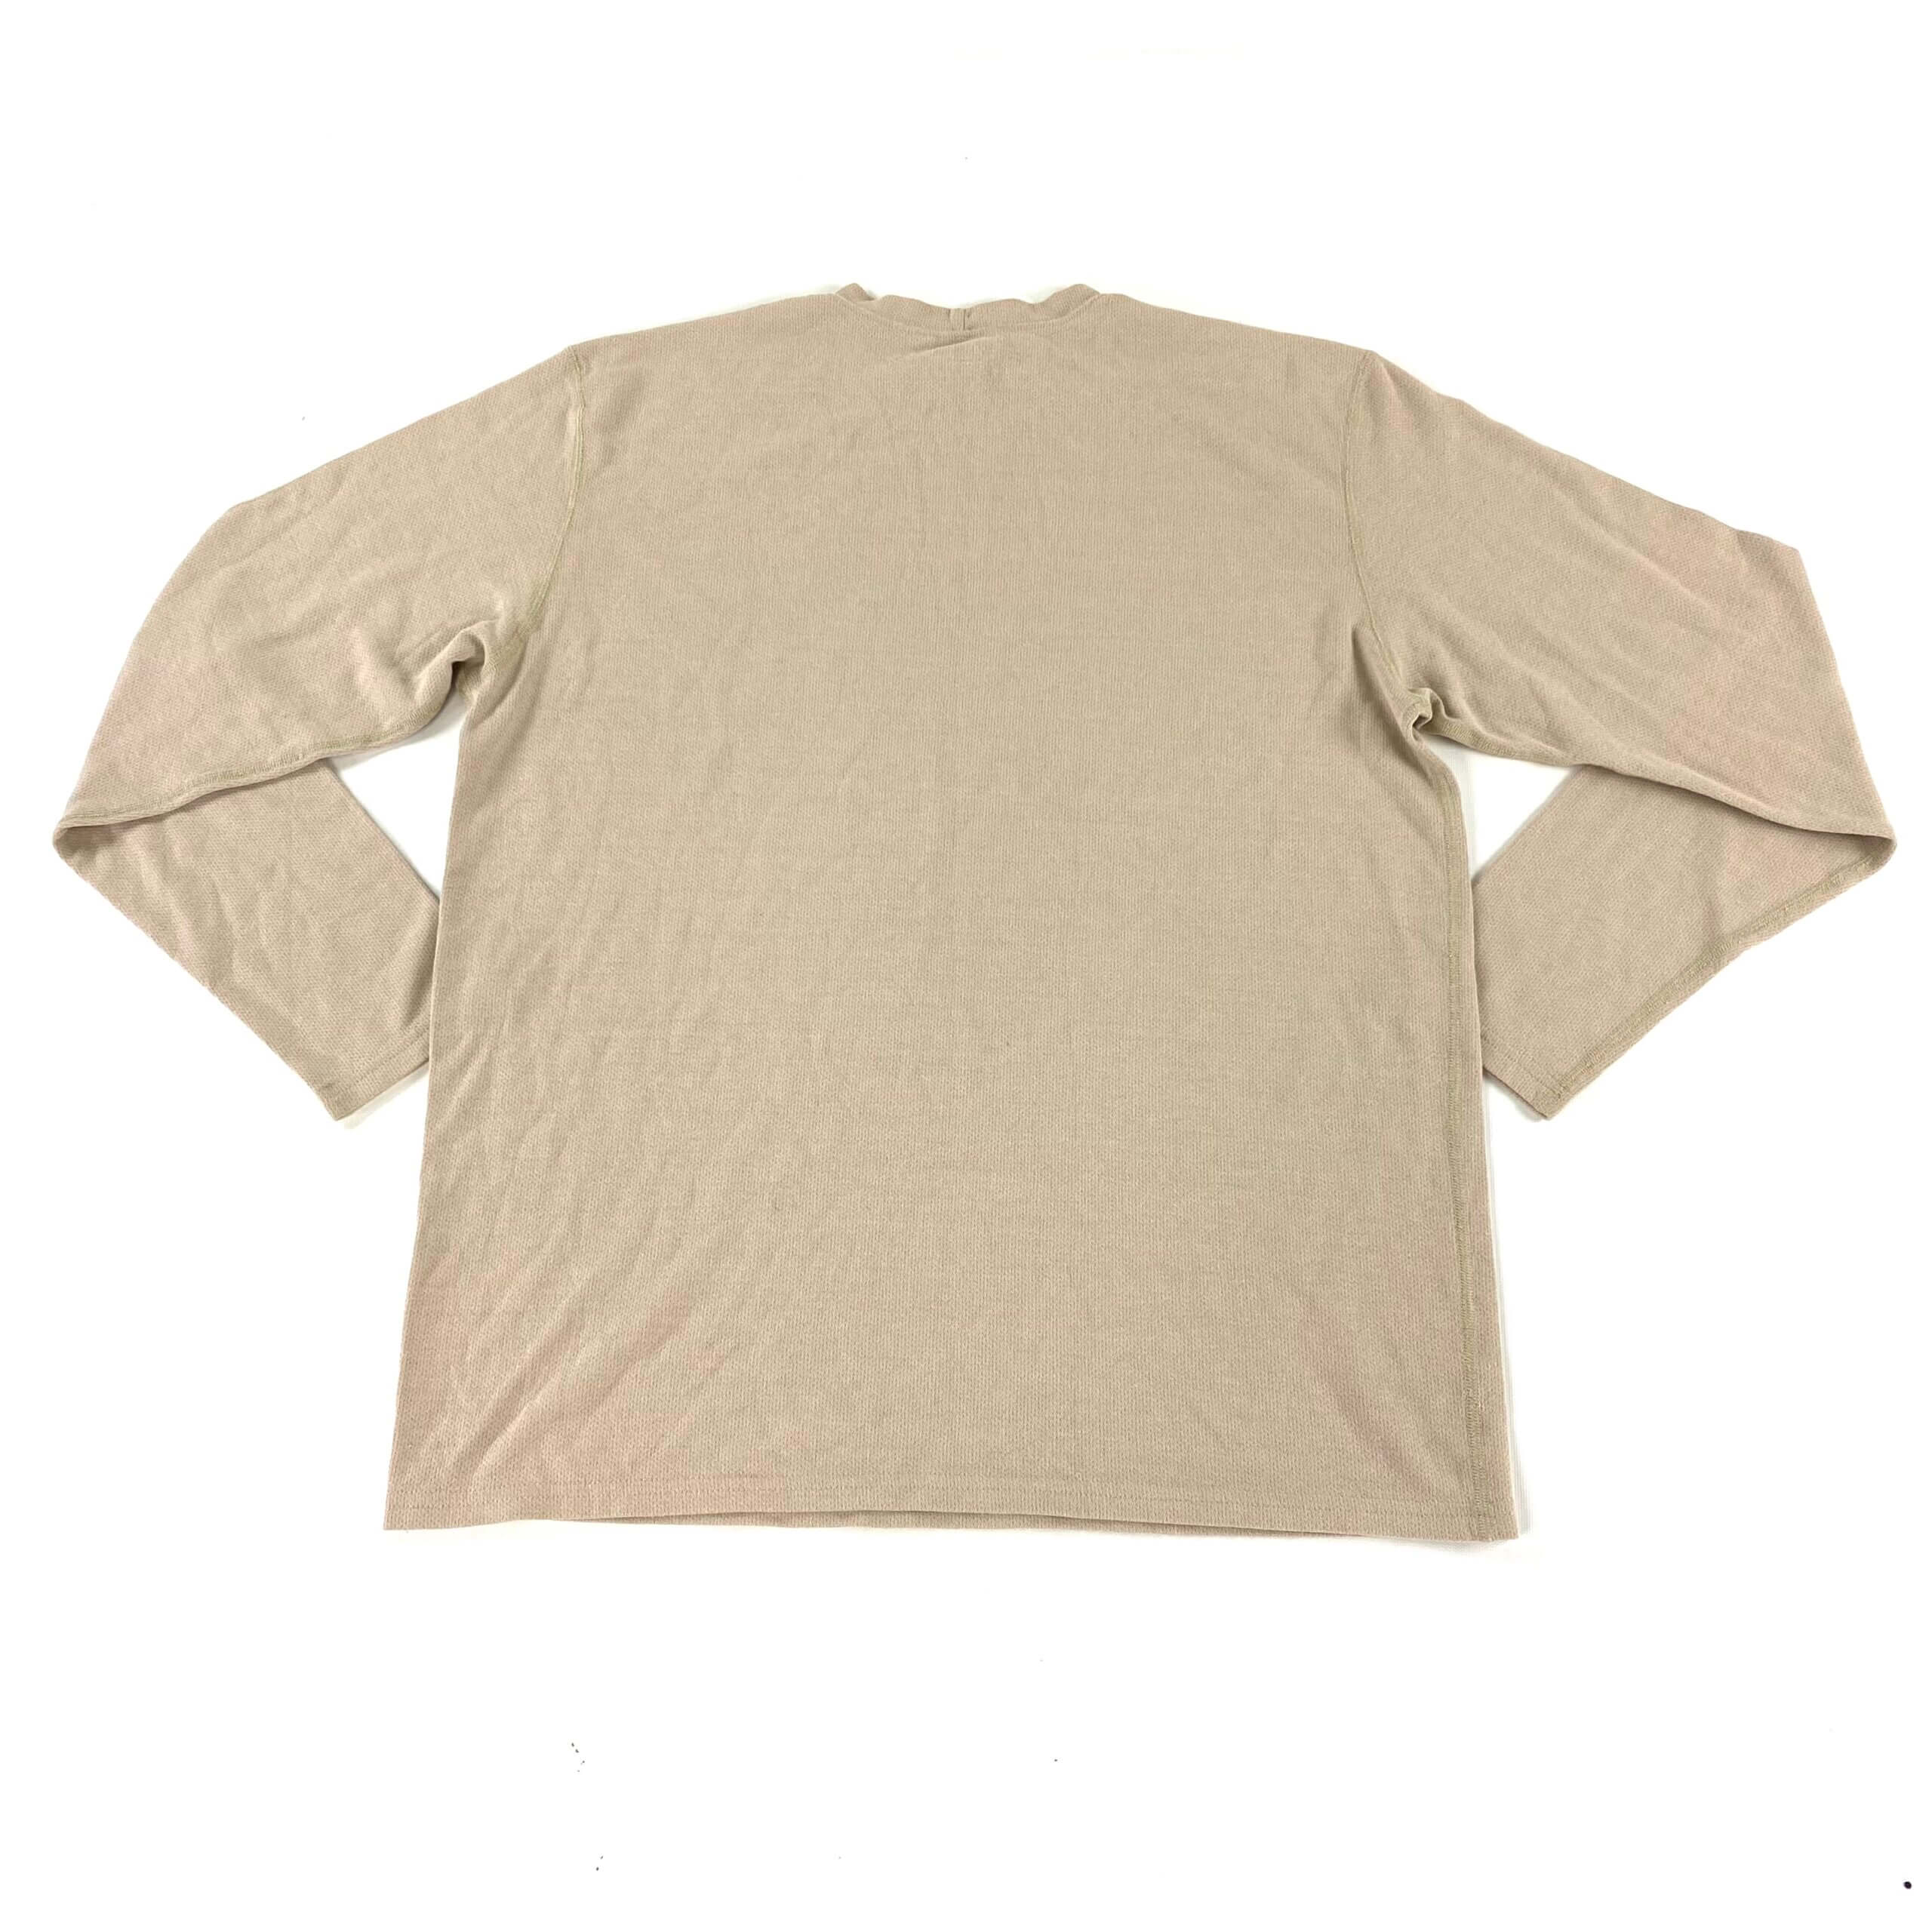 Drifire FR Heavyweight Long Sleeve Shirt, Tan - Venture Surplus